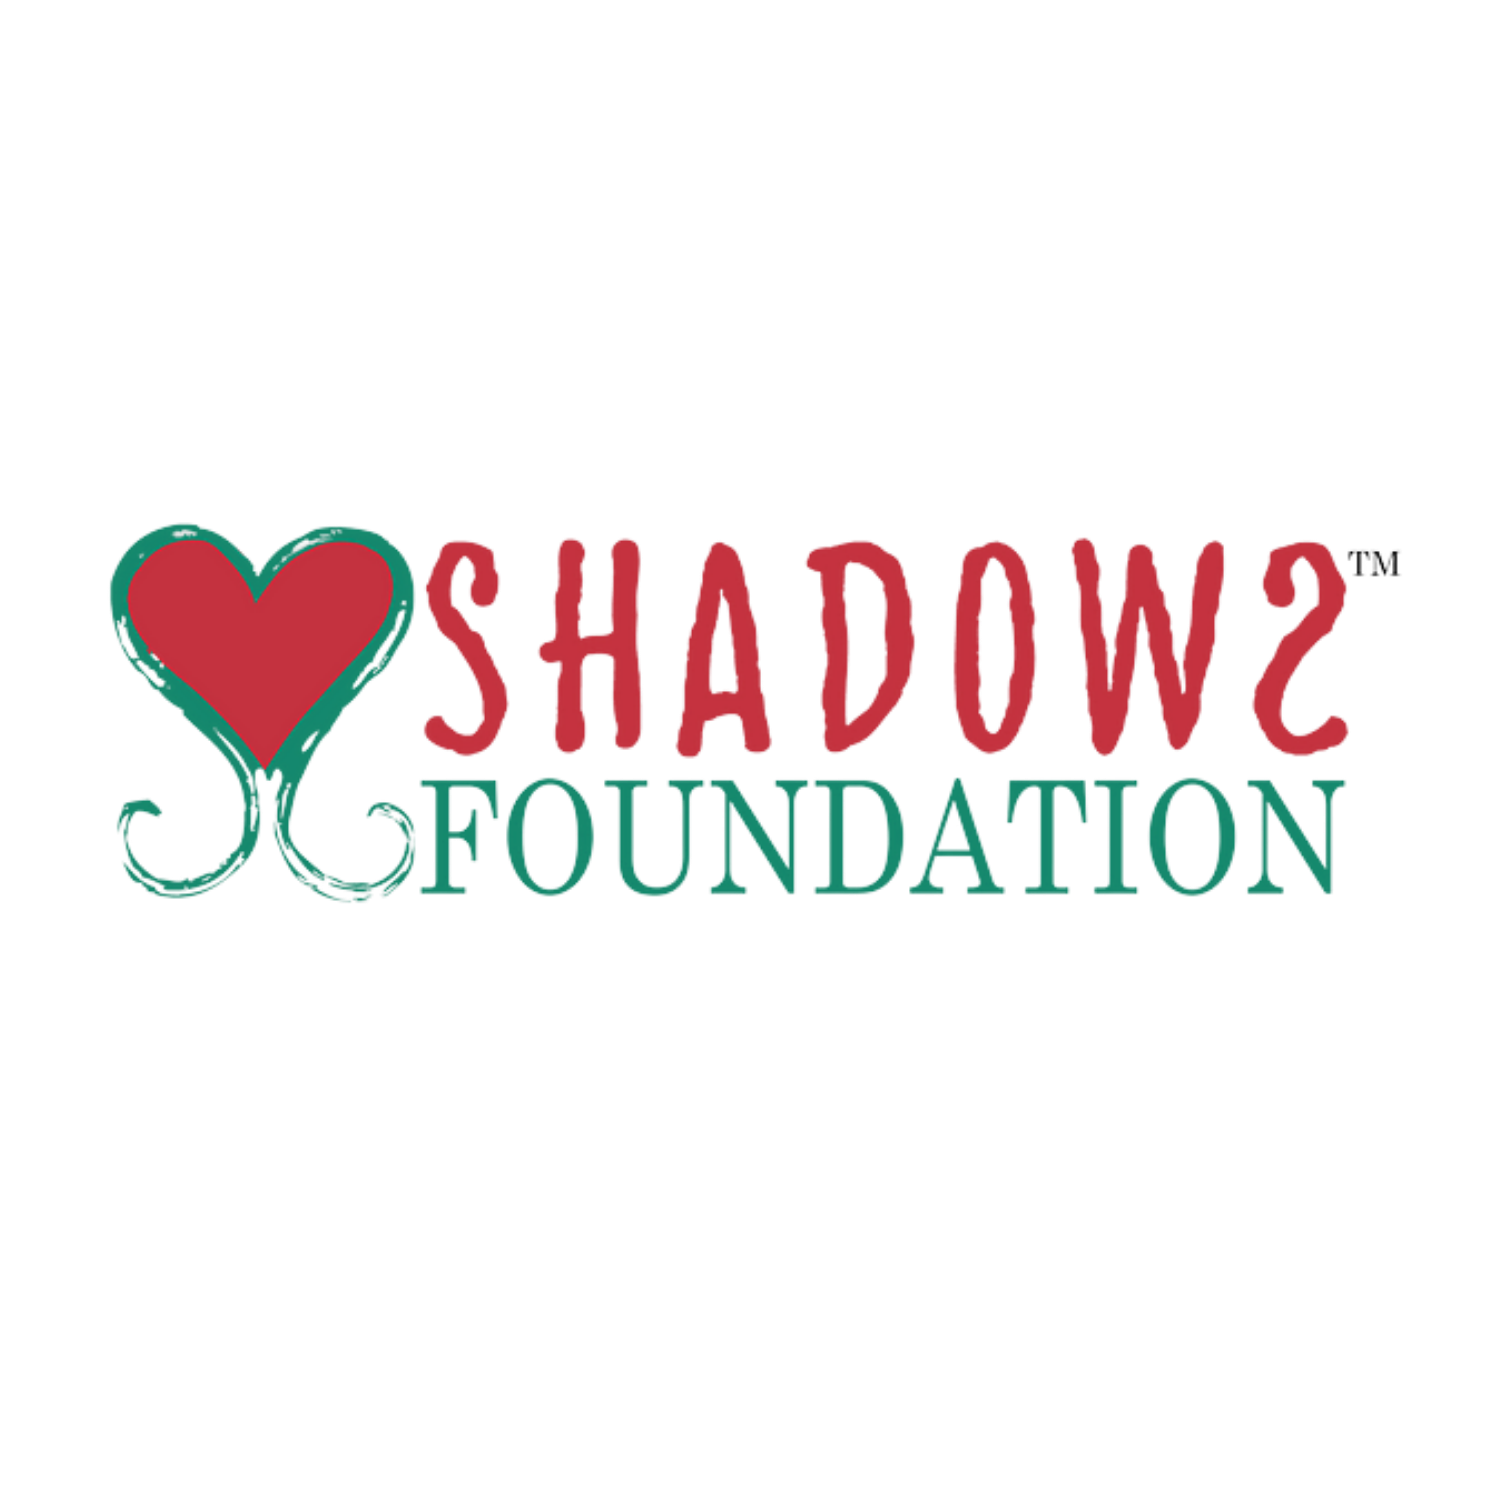 The Shadows Foundation is a local, nonprofit 501(c)(3) organization, based in Flagstaff, Arizona.